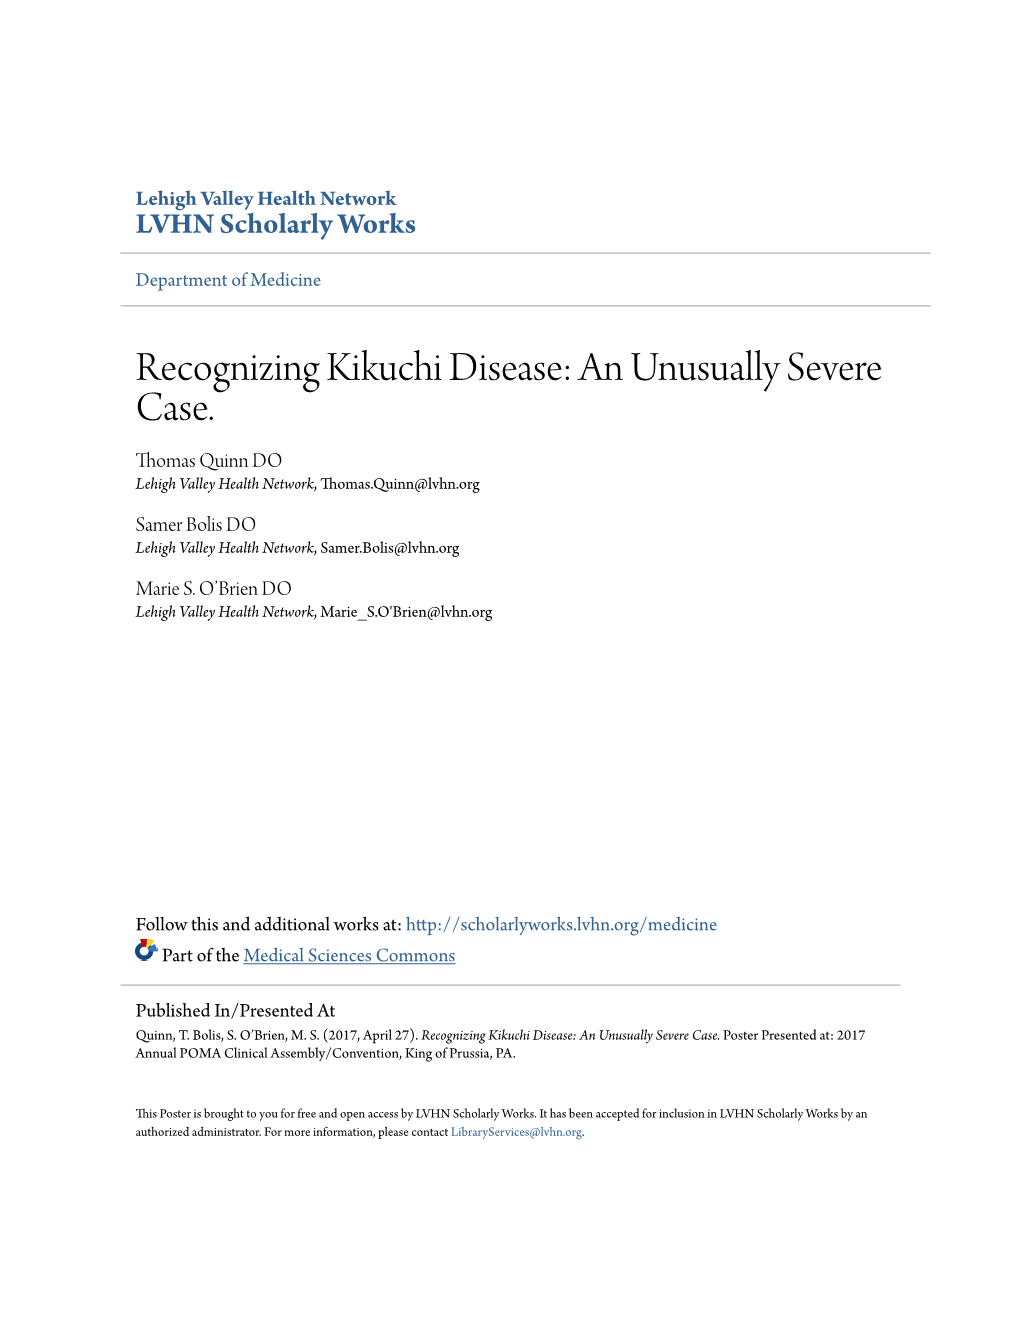 Recognizing Kikuchi Disease: an Unusually Severe Case